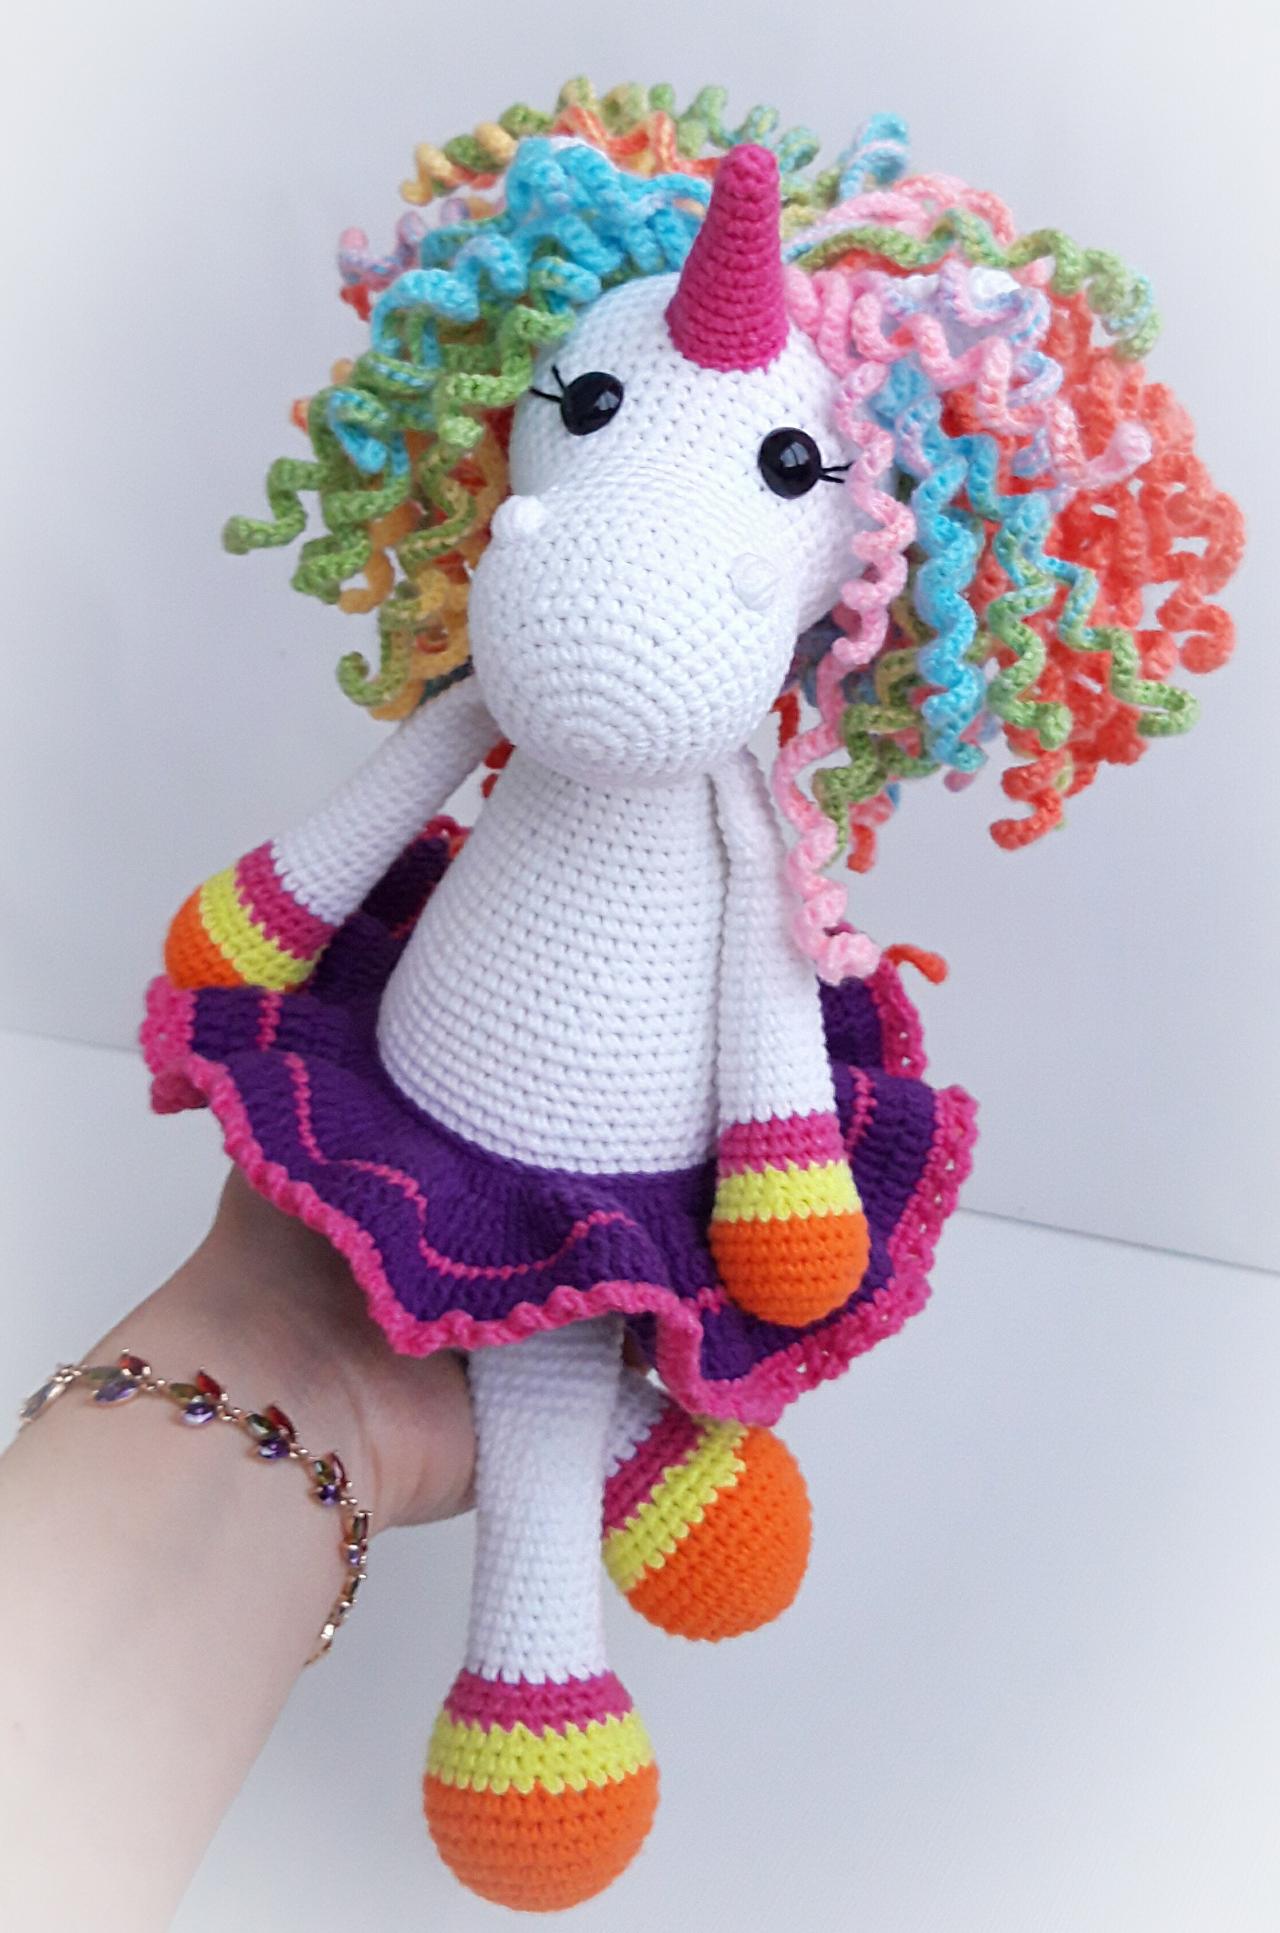 Magic rainbow unicorn toy for girl, Christmas gift,stuffed magic horse doll,unicorn doll,gift for girl,birthday gift,unicorn gift idea